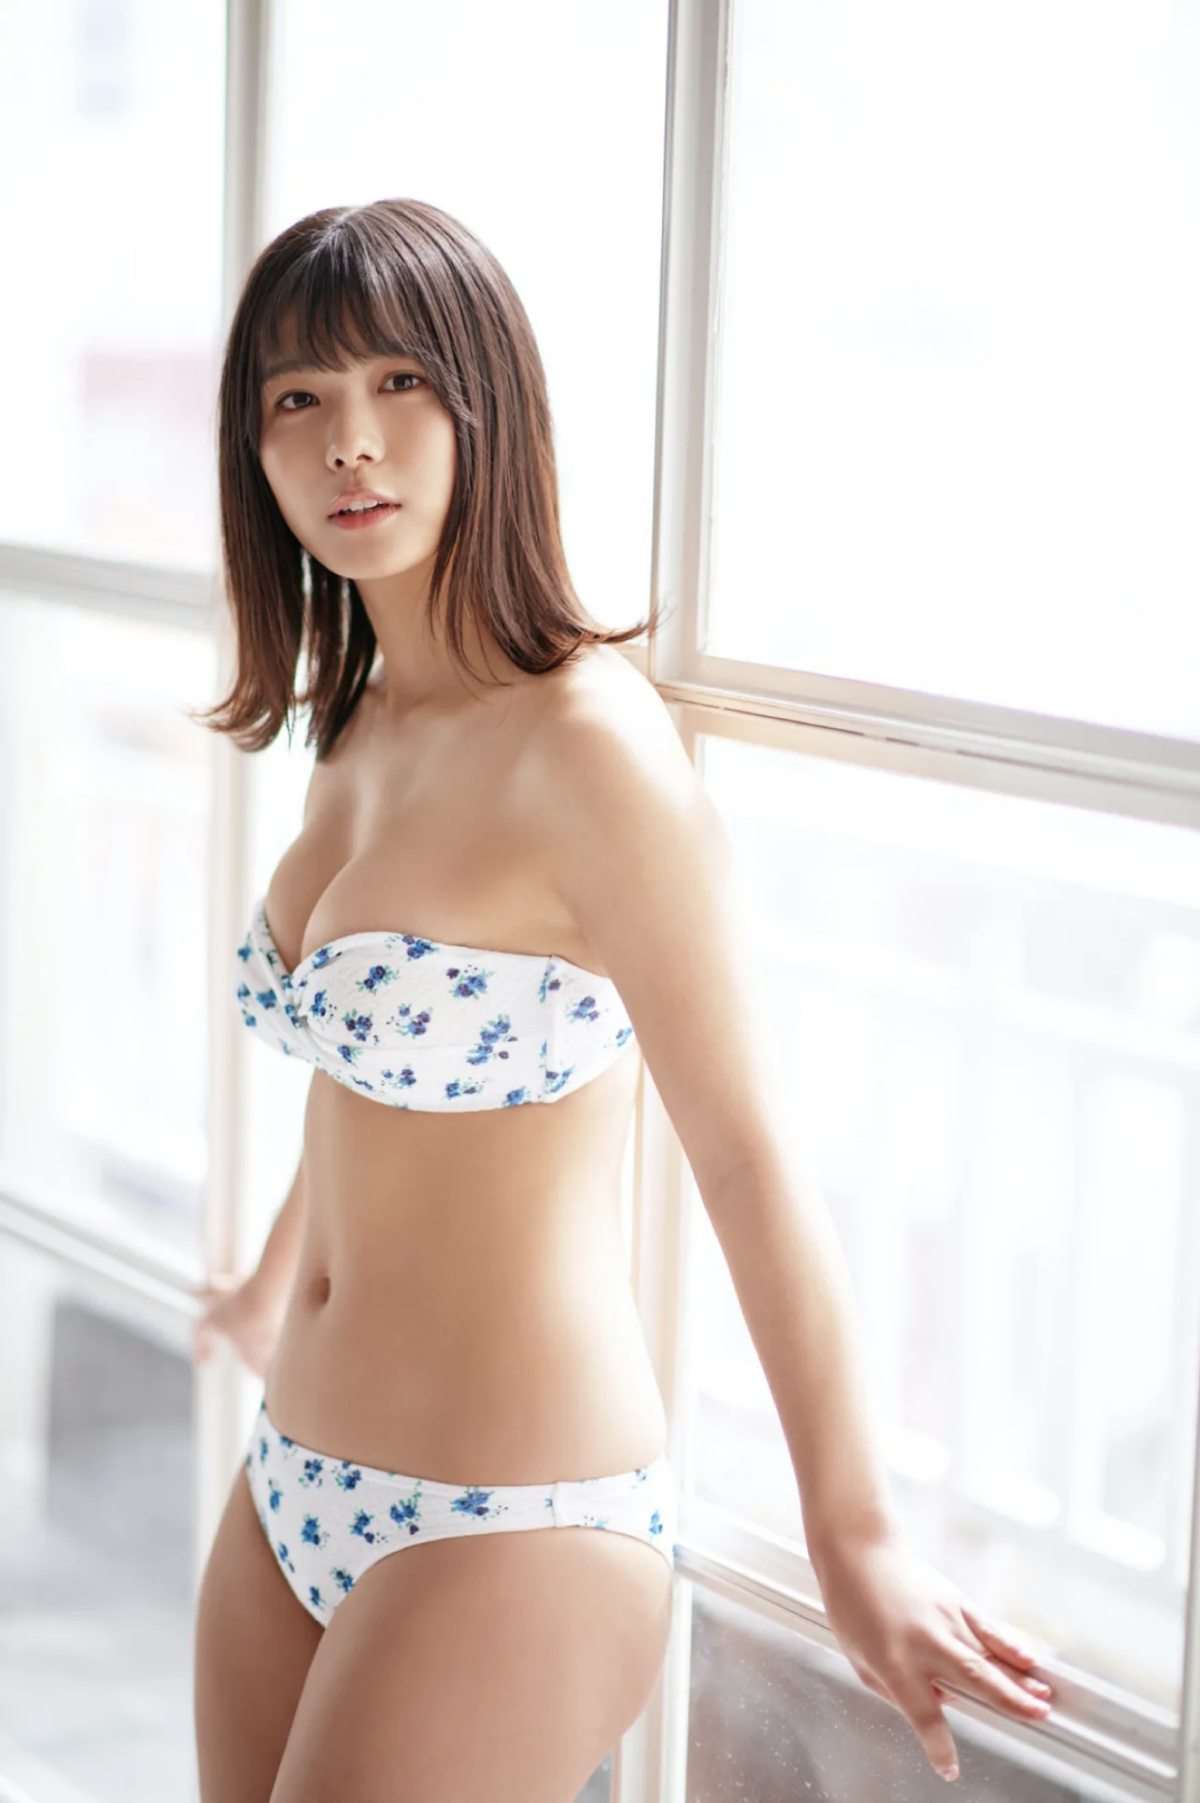 FRIDAY Digital Photobook Nanami Asahi 朝日ななみ 22 year old innocent bikini 22 歳の純真ビキニ 2021 06 04 0007 1508999297.jpg